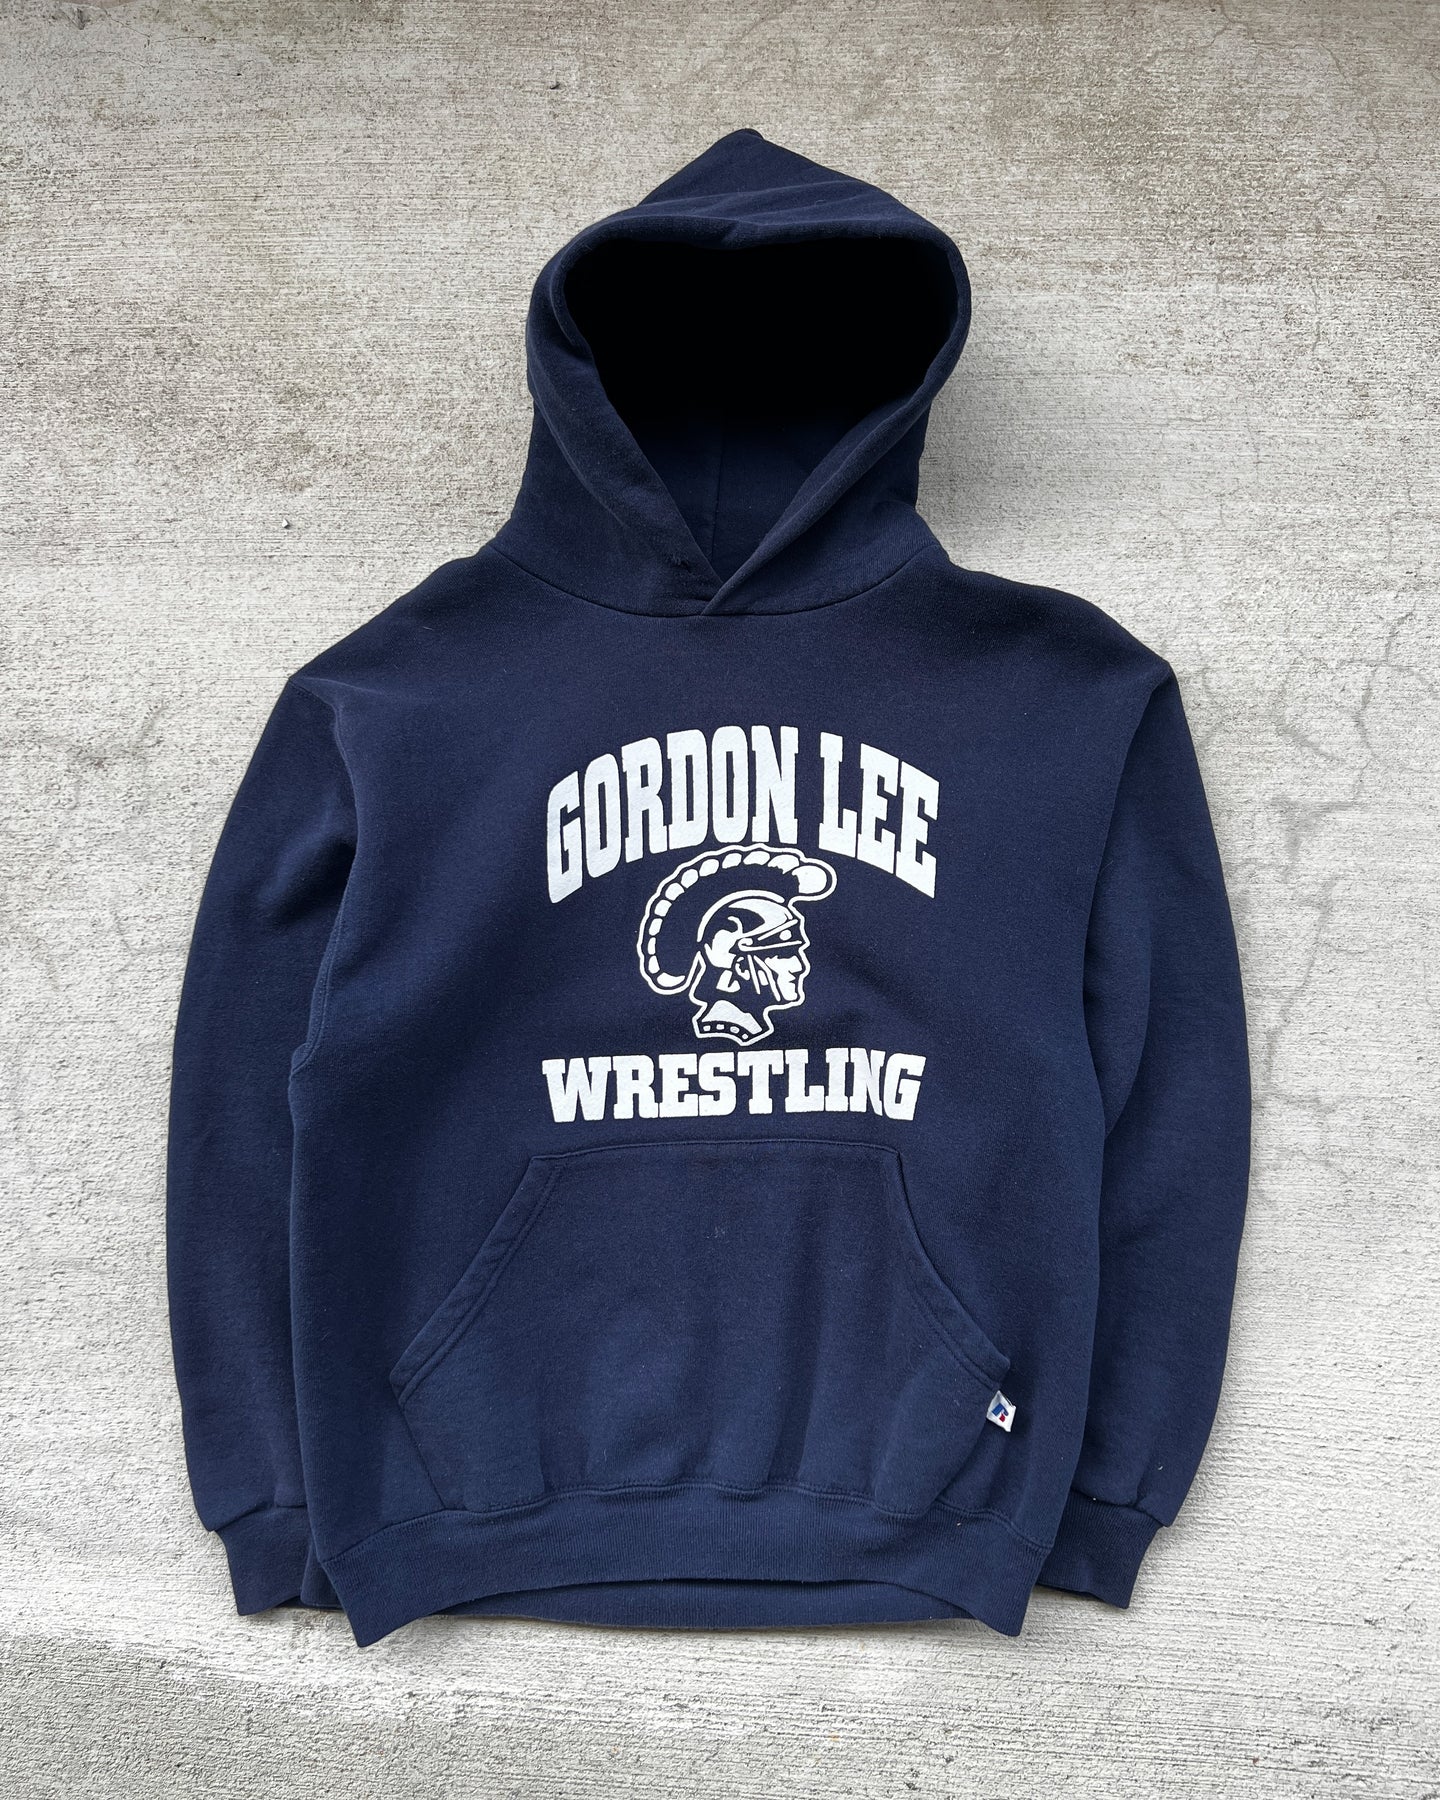 1990s Russell Gordon Lee Wrestling Hoodie - Size Large